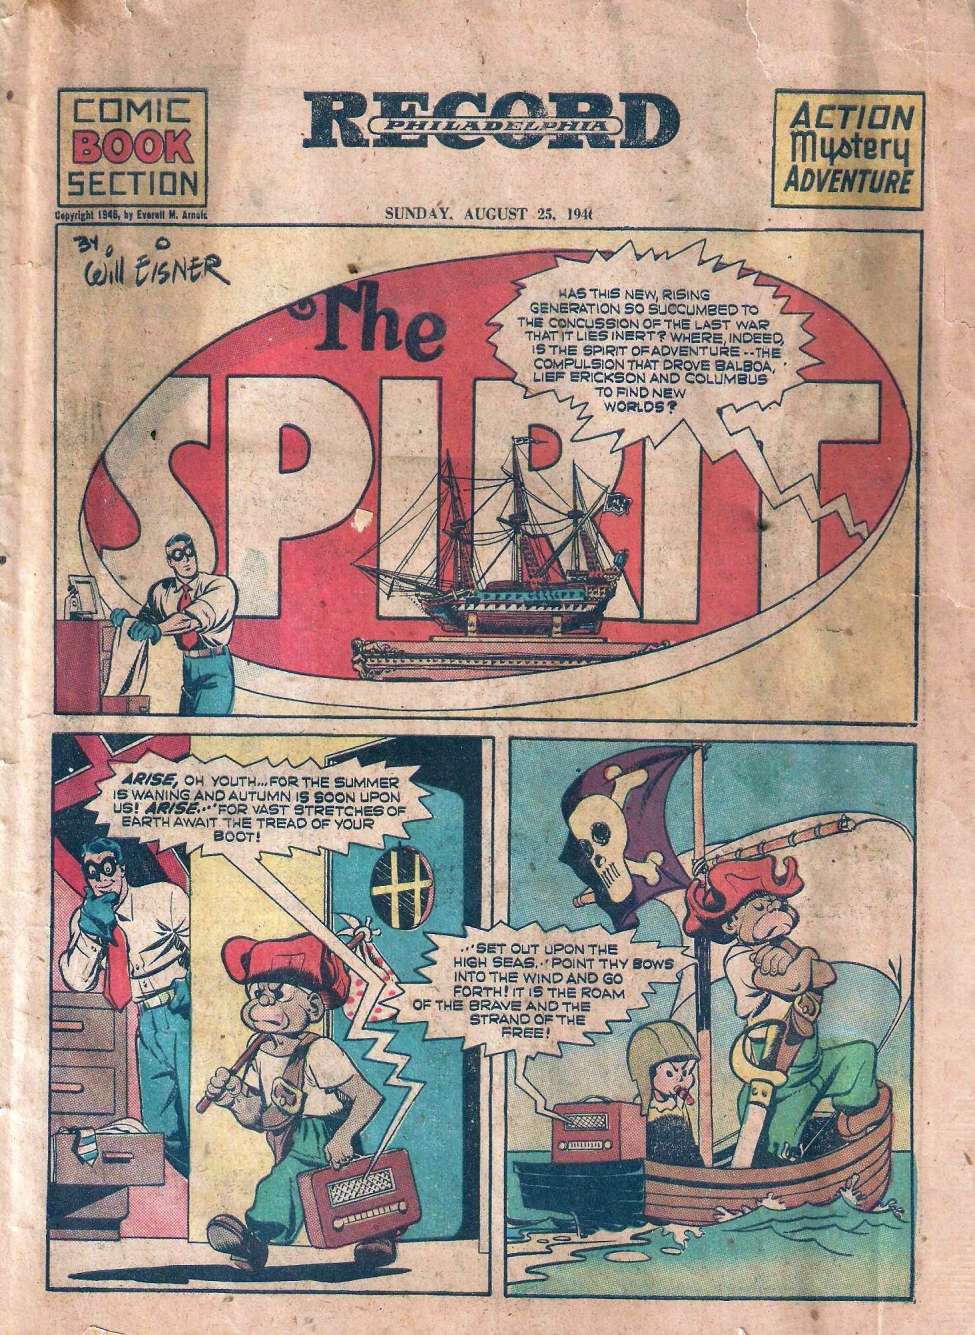 Comic Book Cover For The Spirit (1946-08-25) - Philadelphia Record